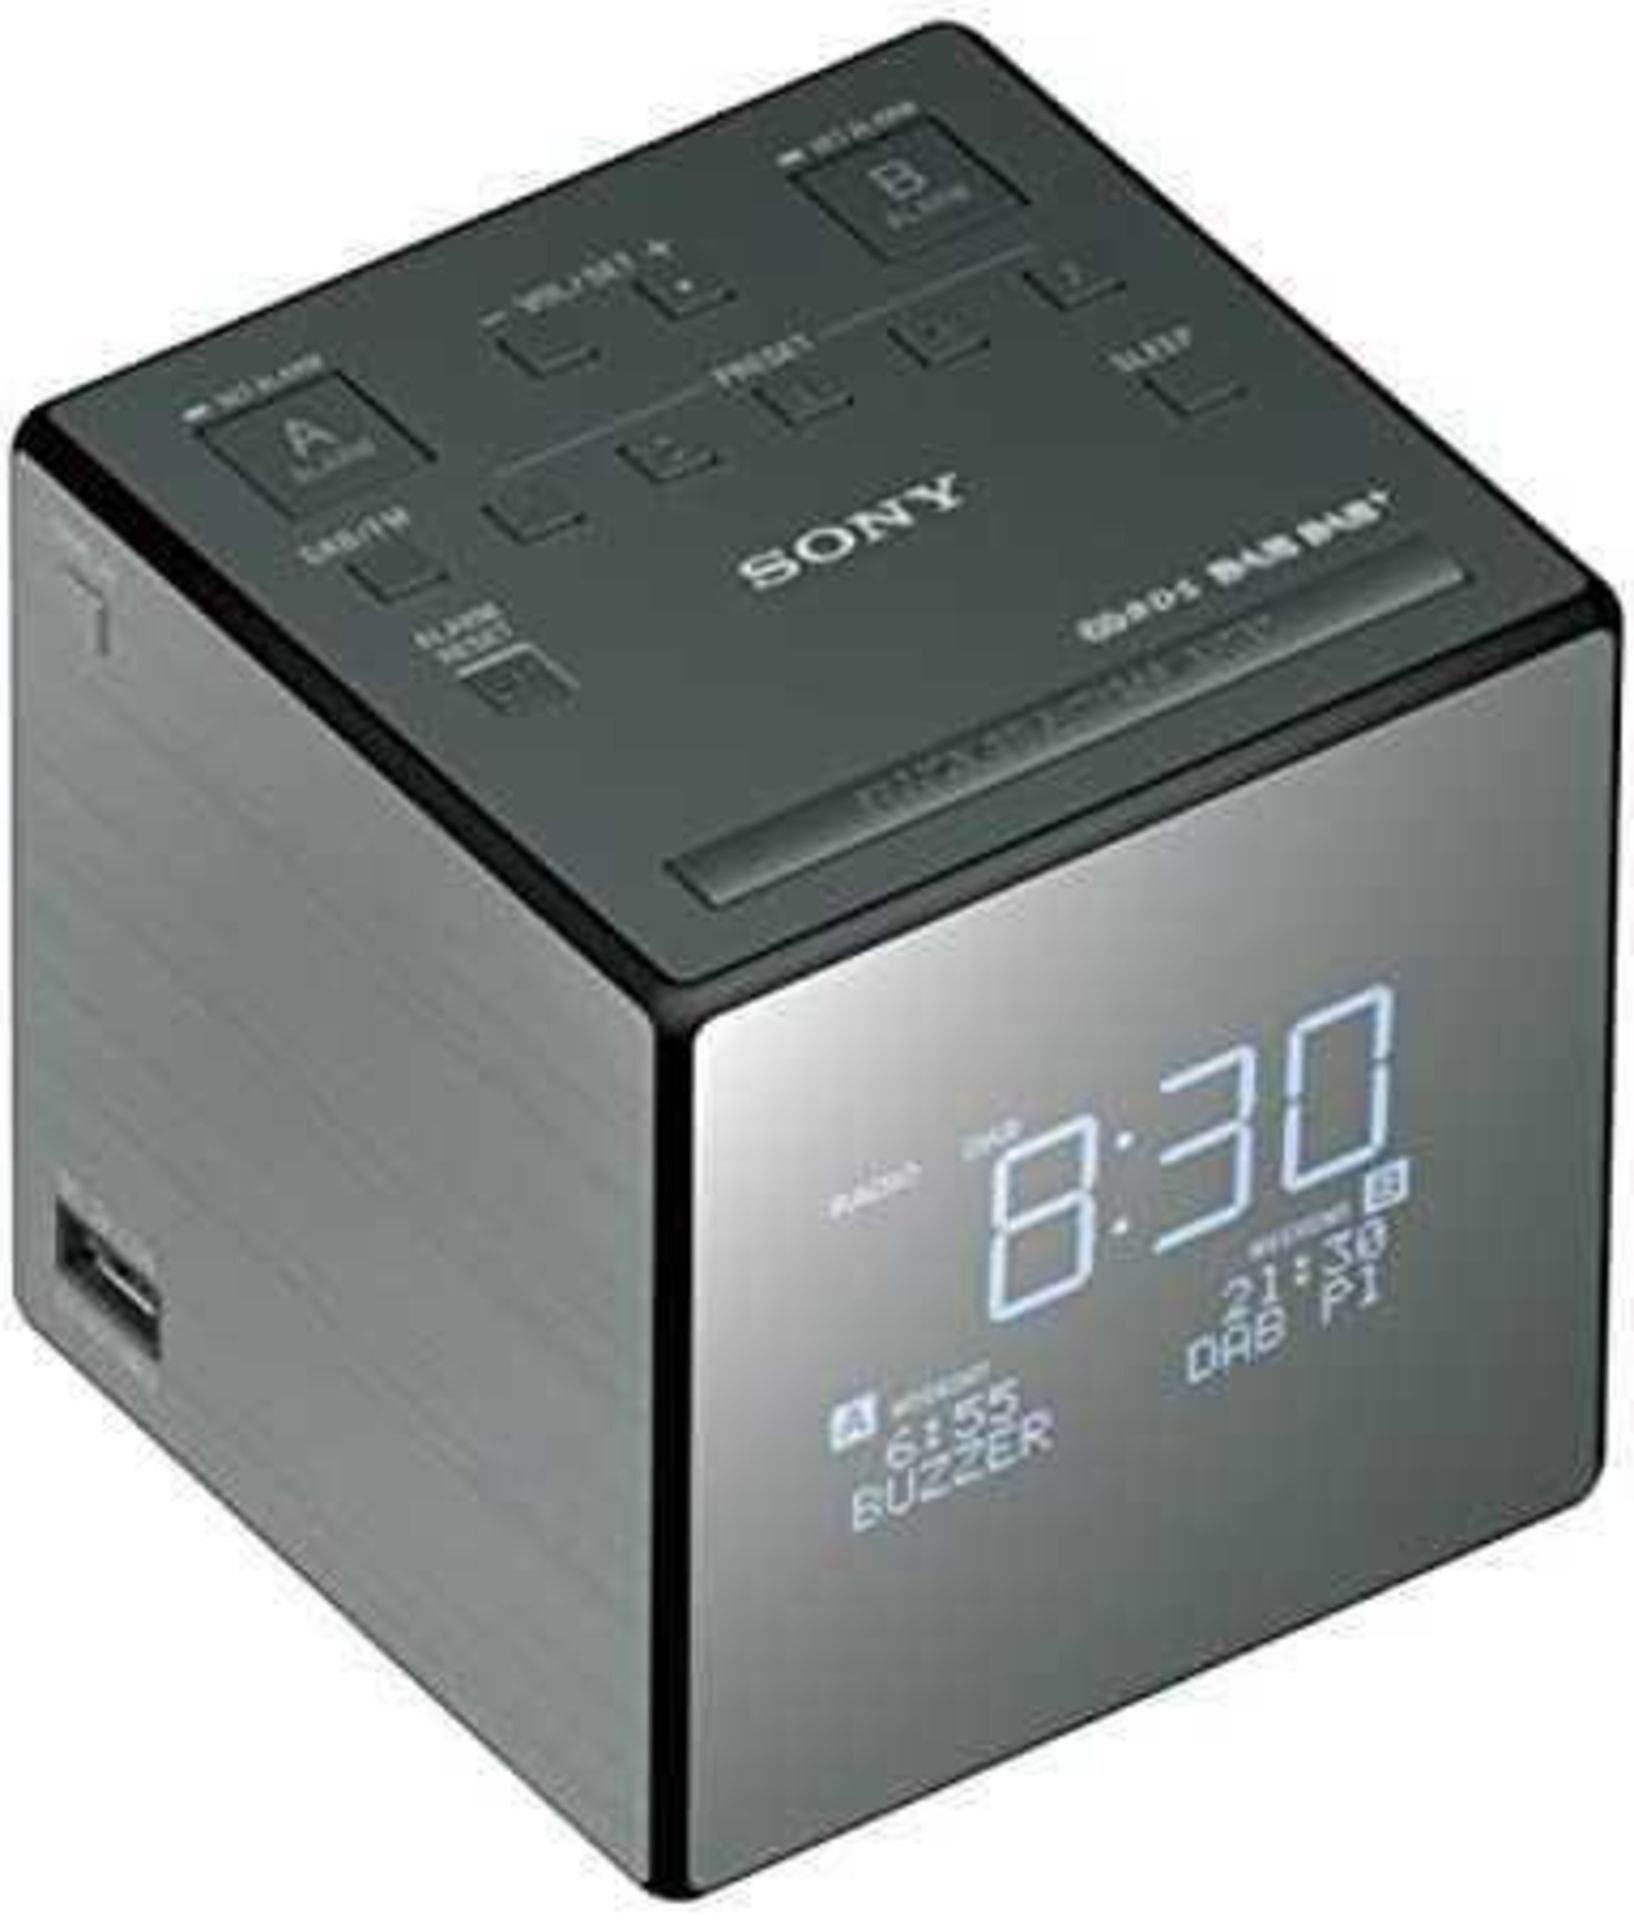 RRP £70 Boxed Sony Xdr C1D8P Radio Clock Boxed (Jg) 82302205